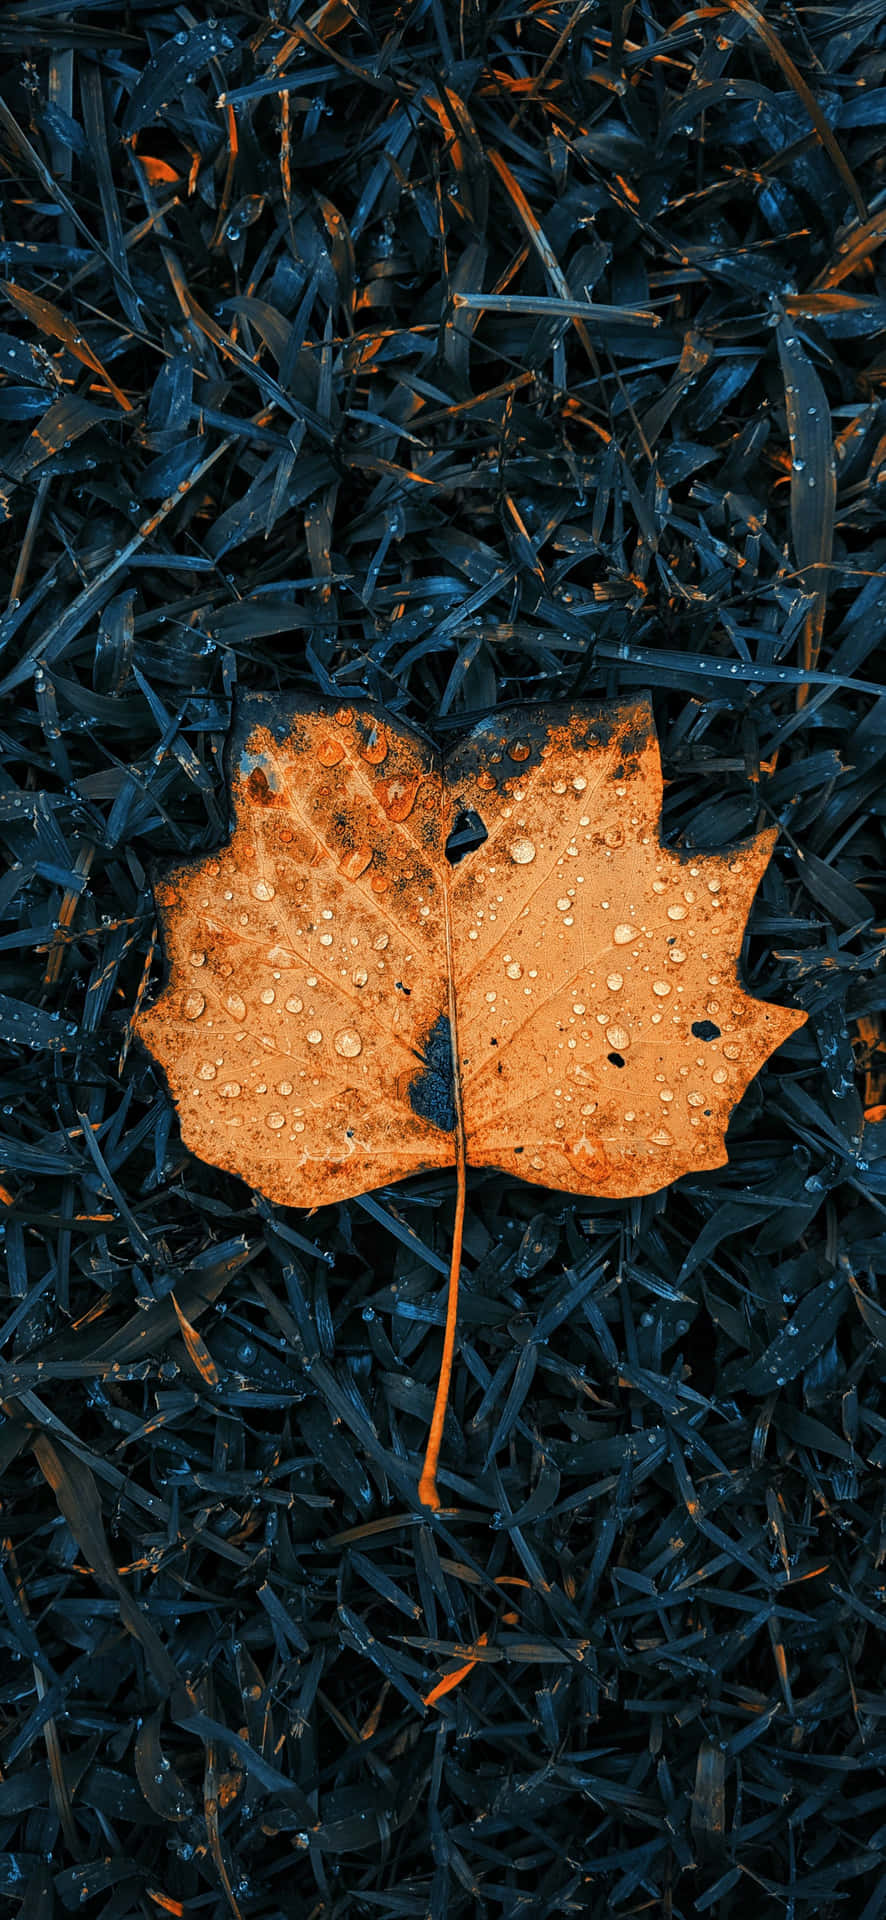 Download Fallen Leaves 1814 X 3931 Wallpaper Wallpaper | Wallpapers.com